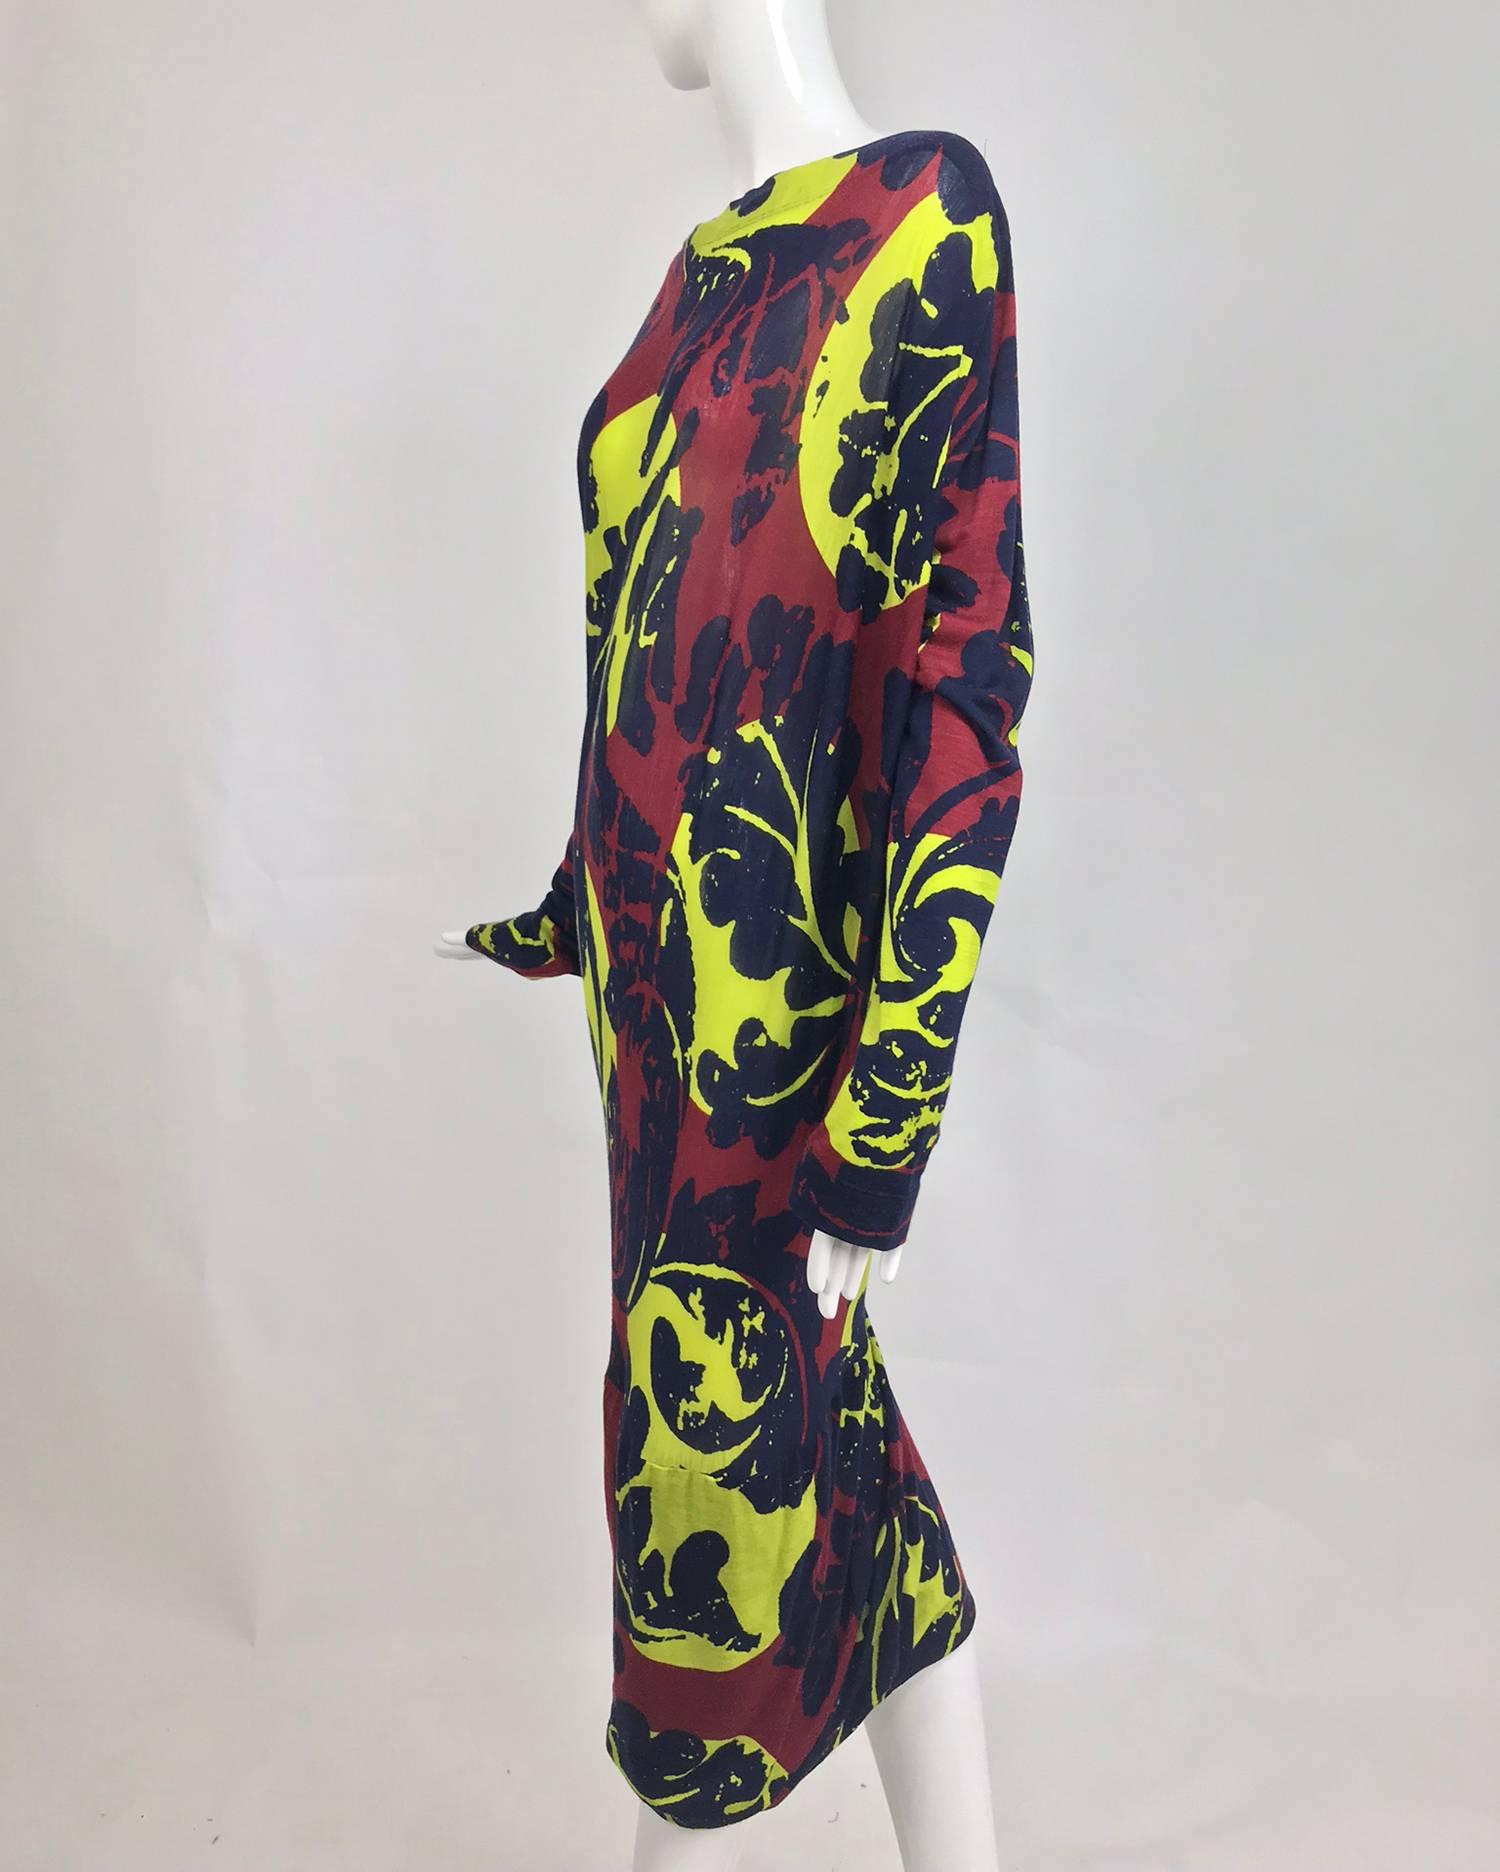 Vivienne Westwood Anglomania asymetrical print knit jersey dress 1